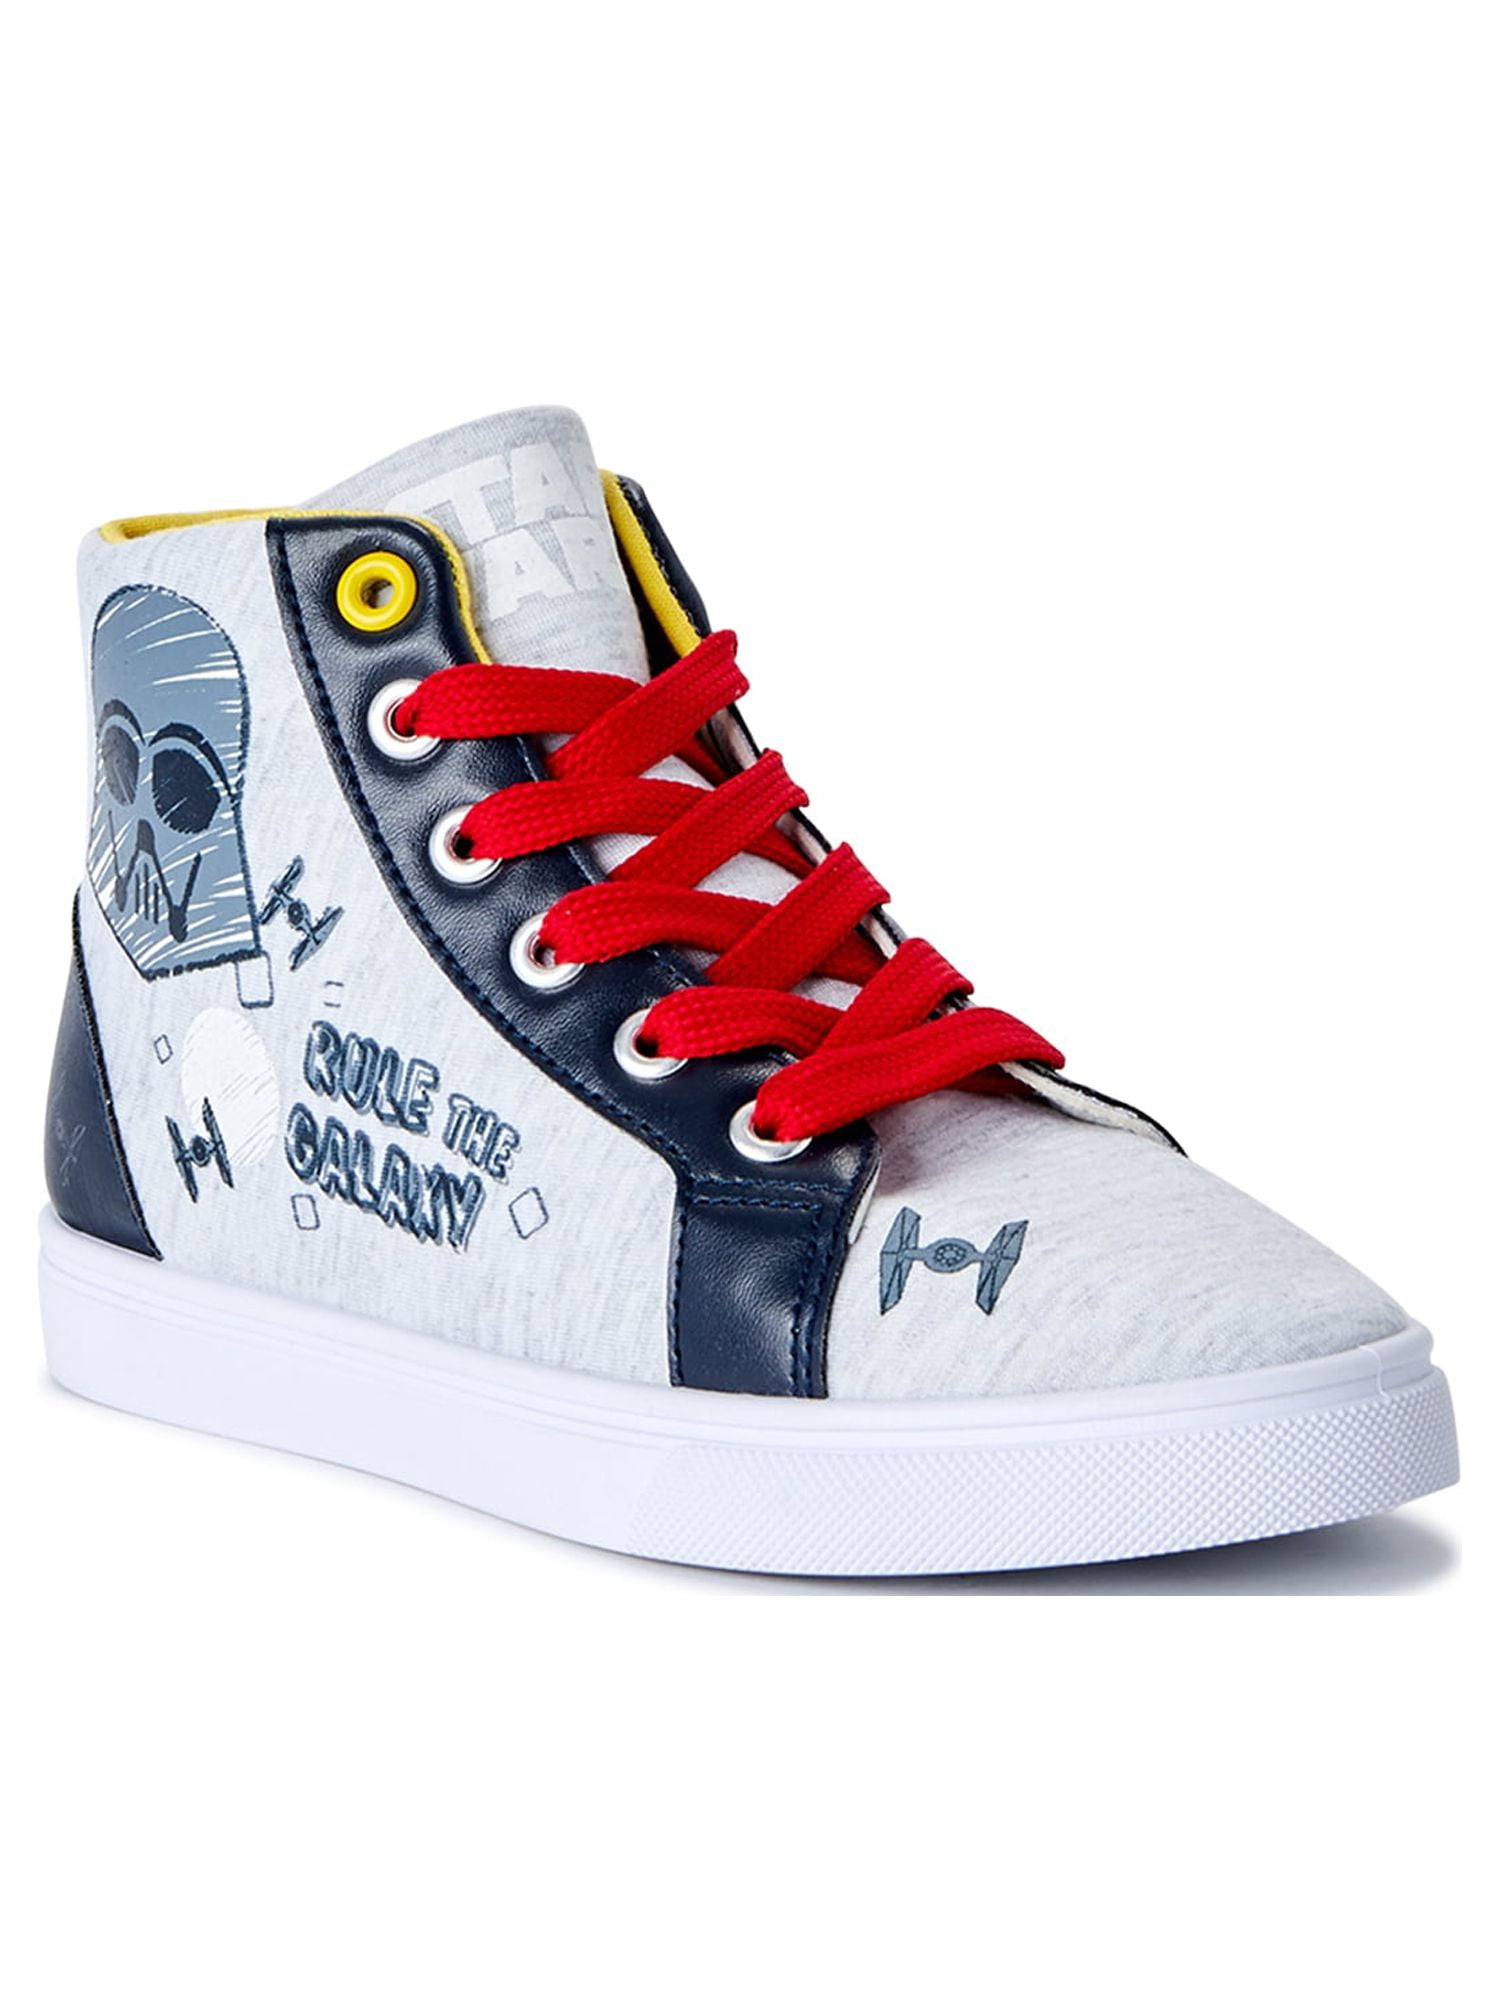 Star Wars Darth Vader Disney Cartoon Sneakers Boots Air Jordan Hightop Shoes